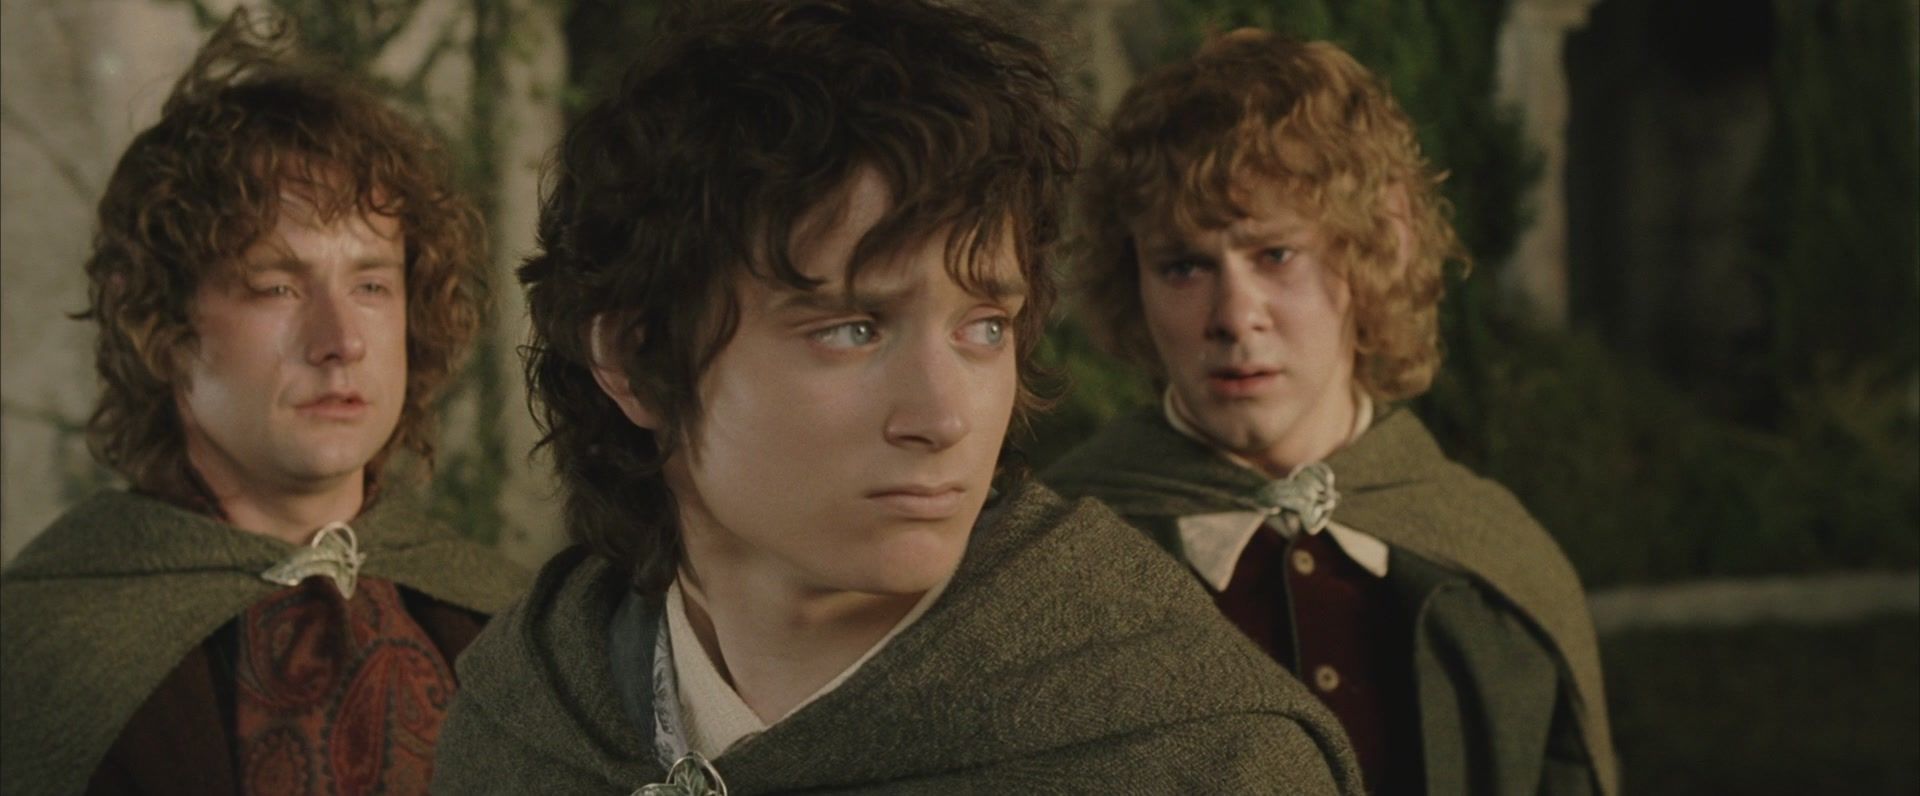 Frodo & Sam Photo: LOTR: The Return of the King.